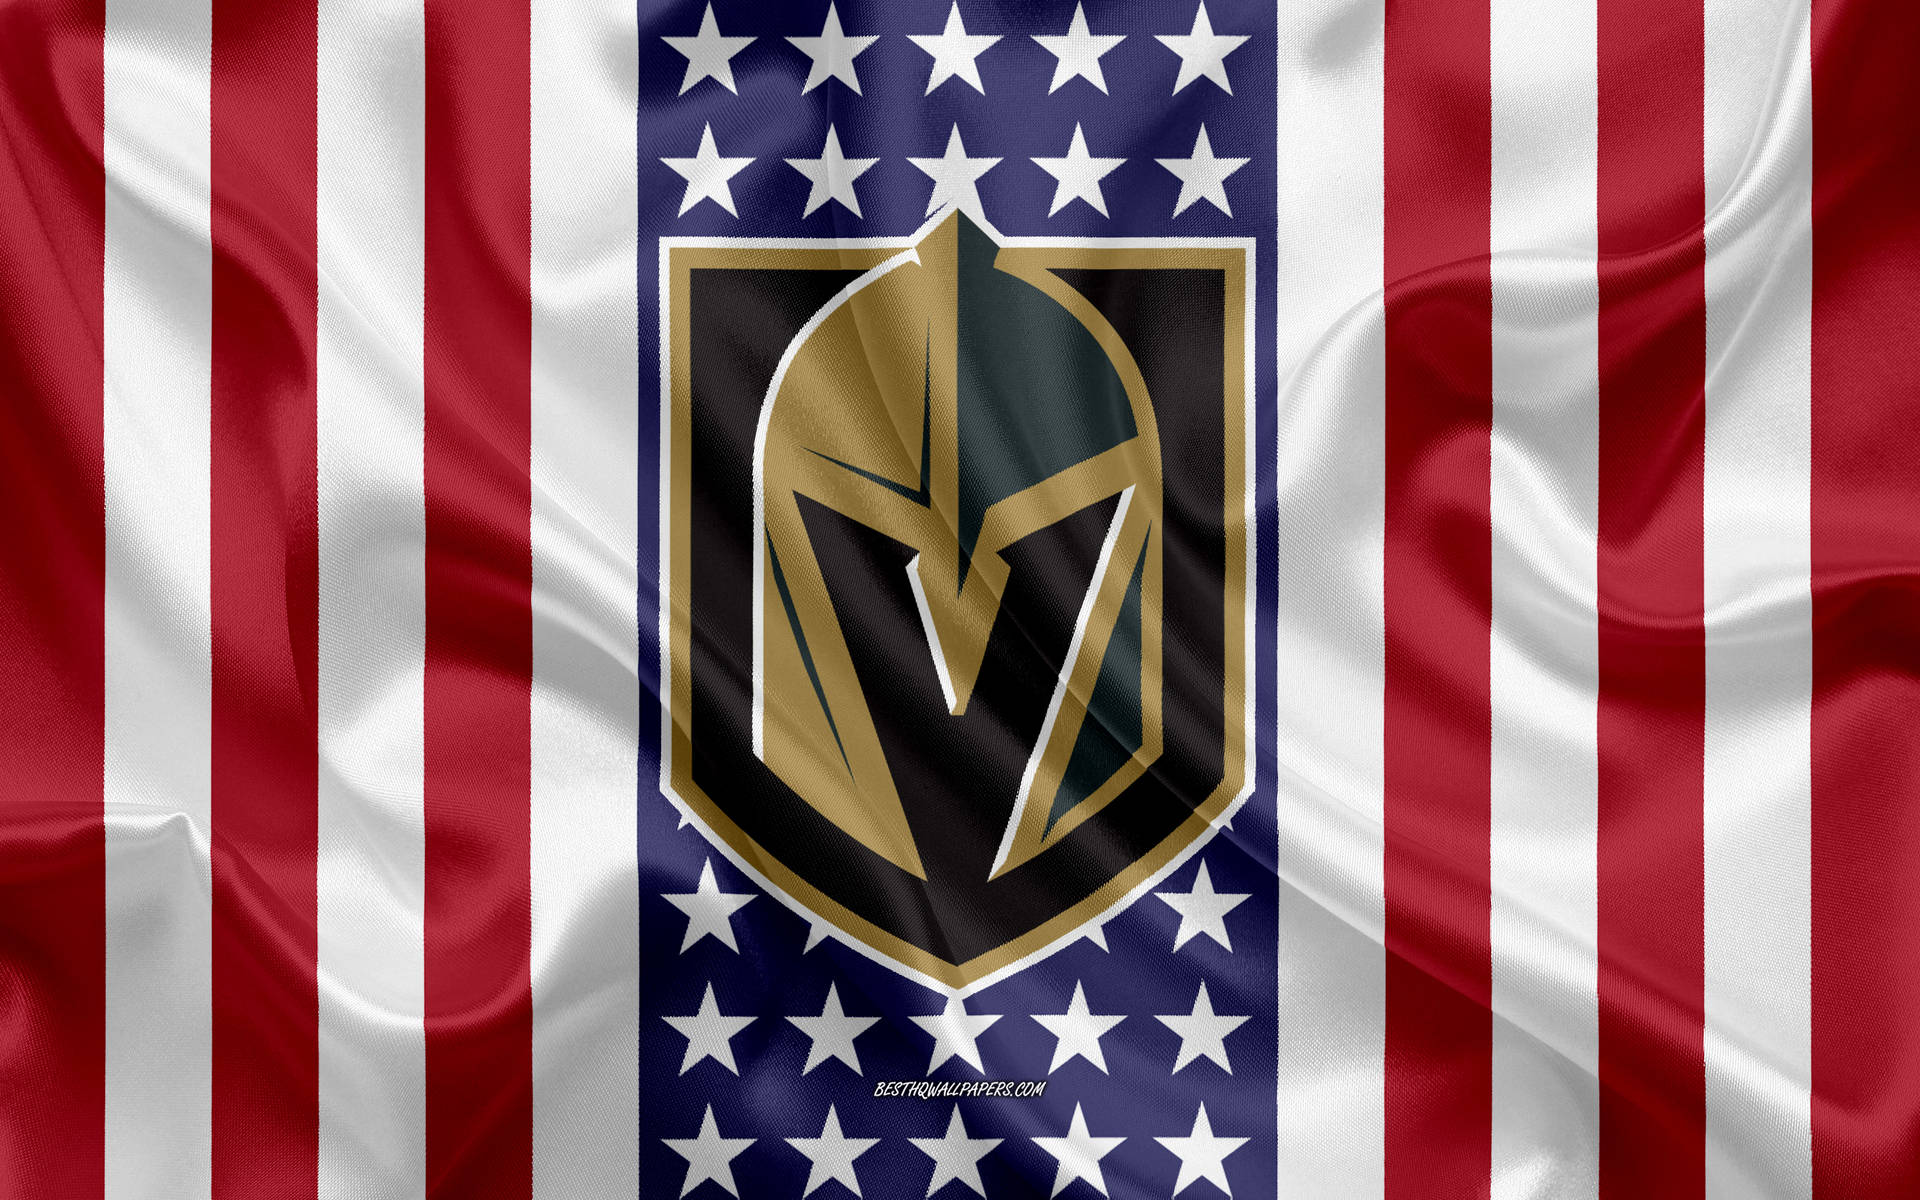 Vegas Golden Knights Emblem On Us Flag